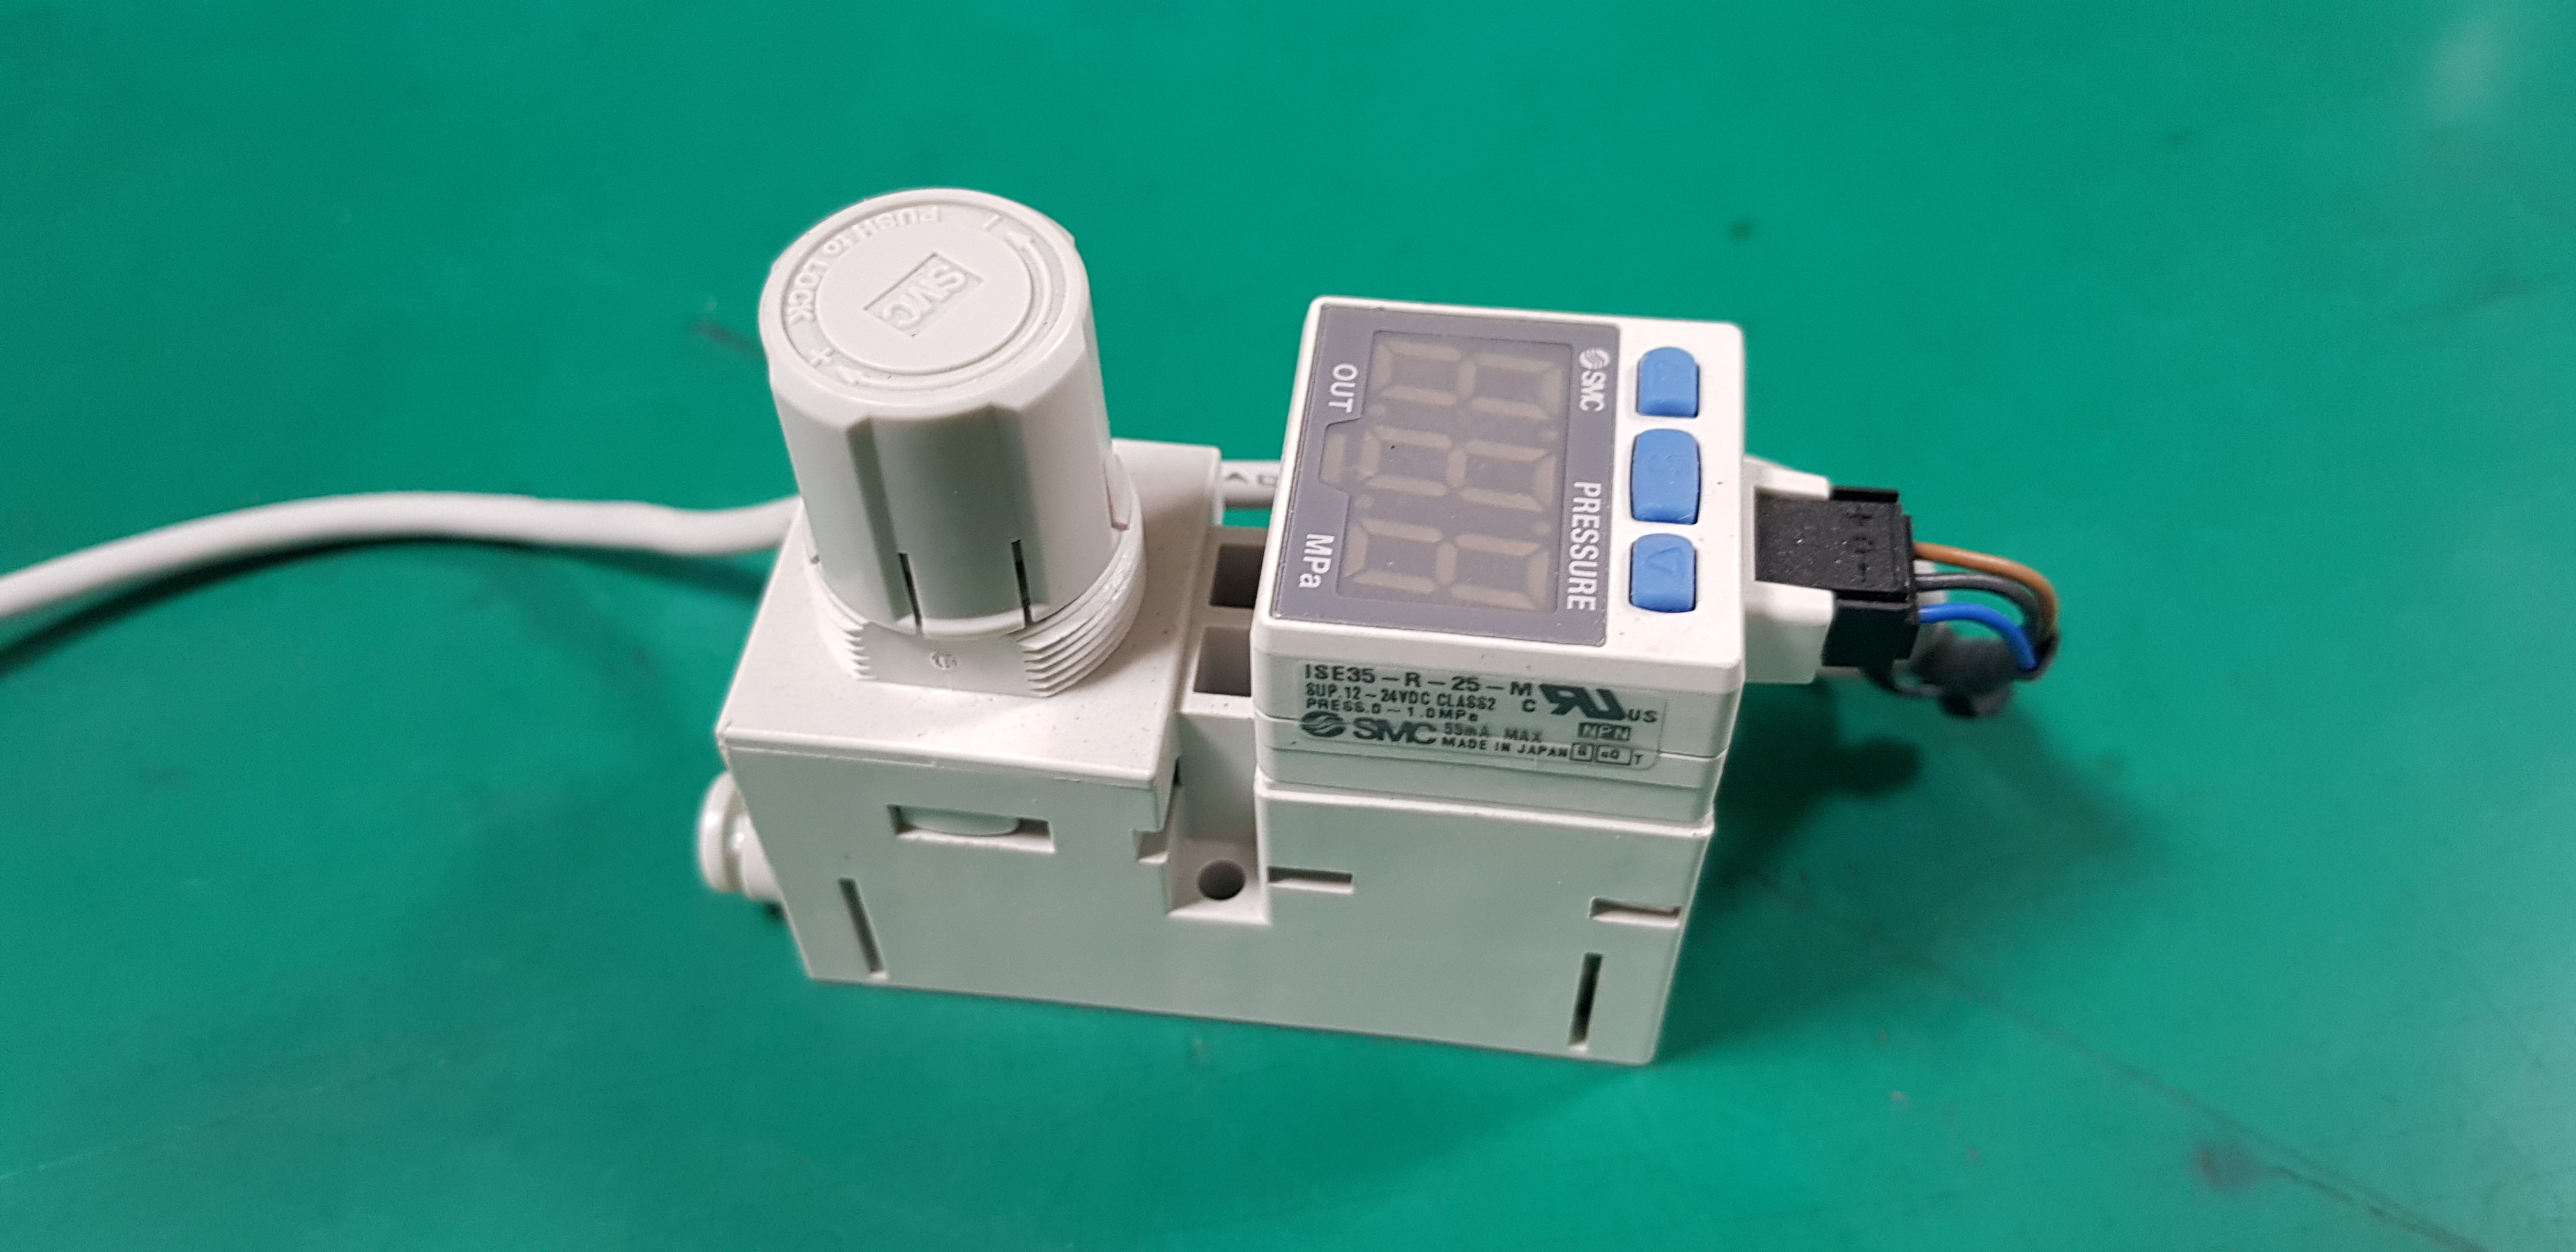 SMC ARM10F1-06BG-N+ISE35-25-M Compact mfld regulator (중고)